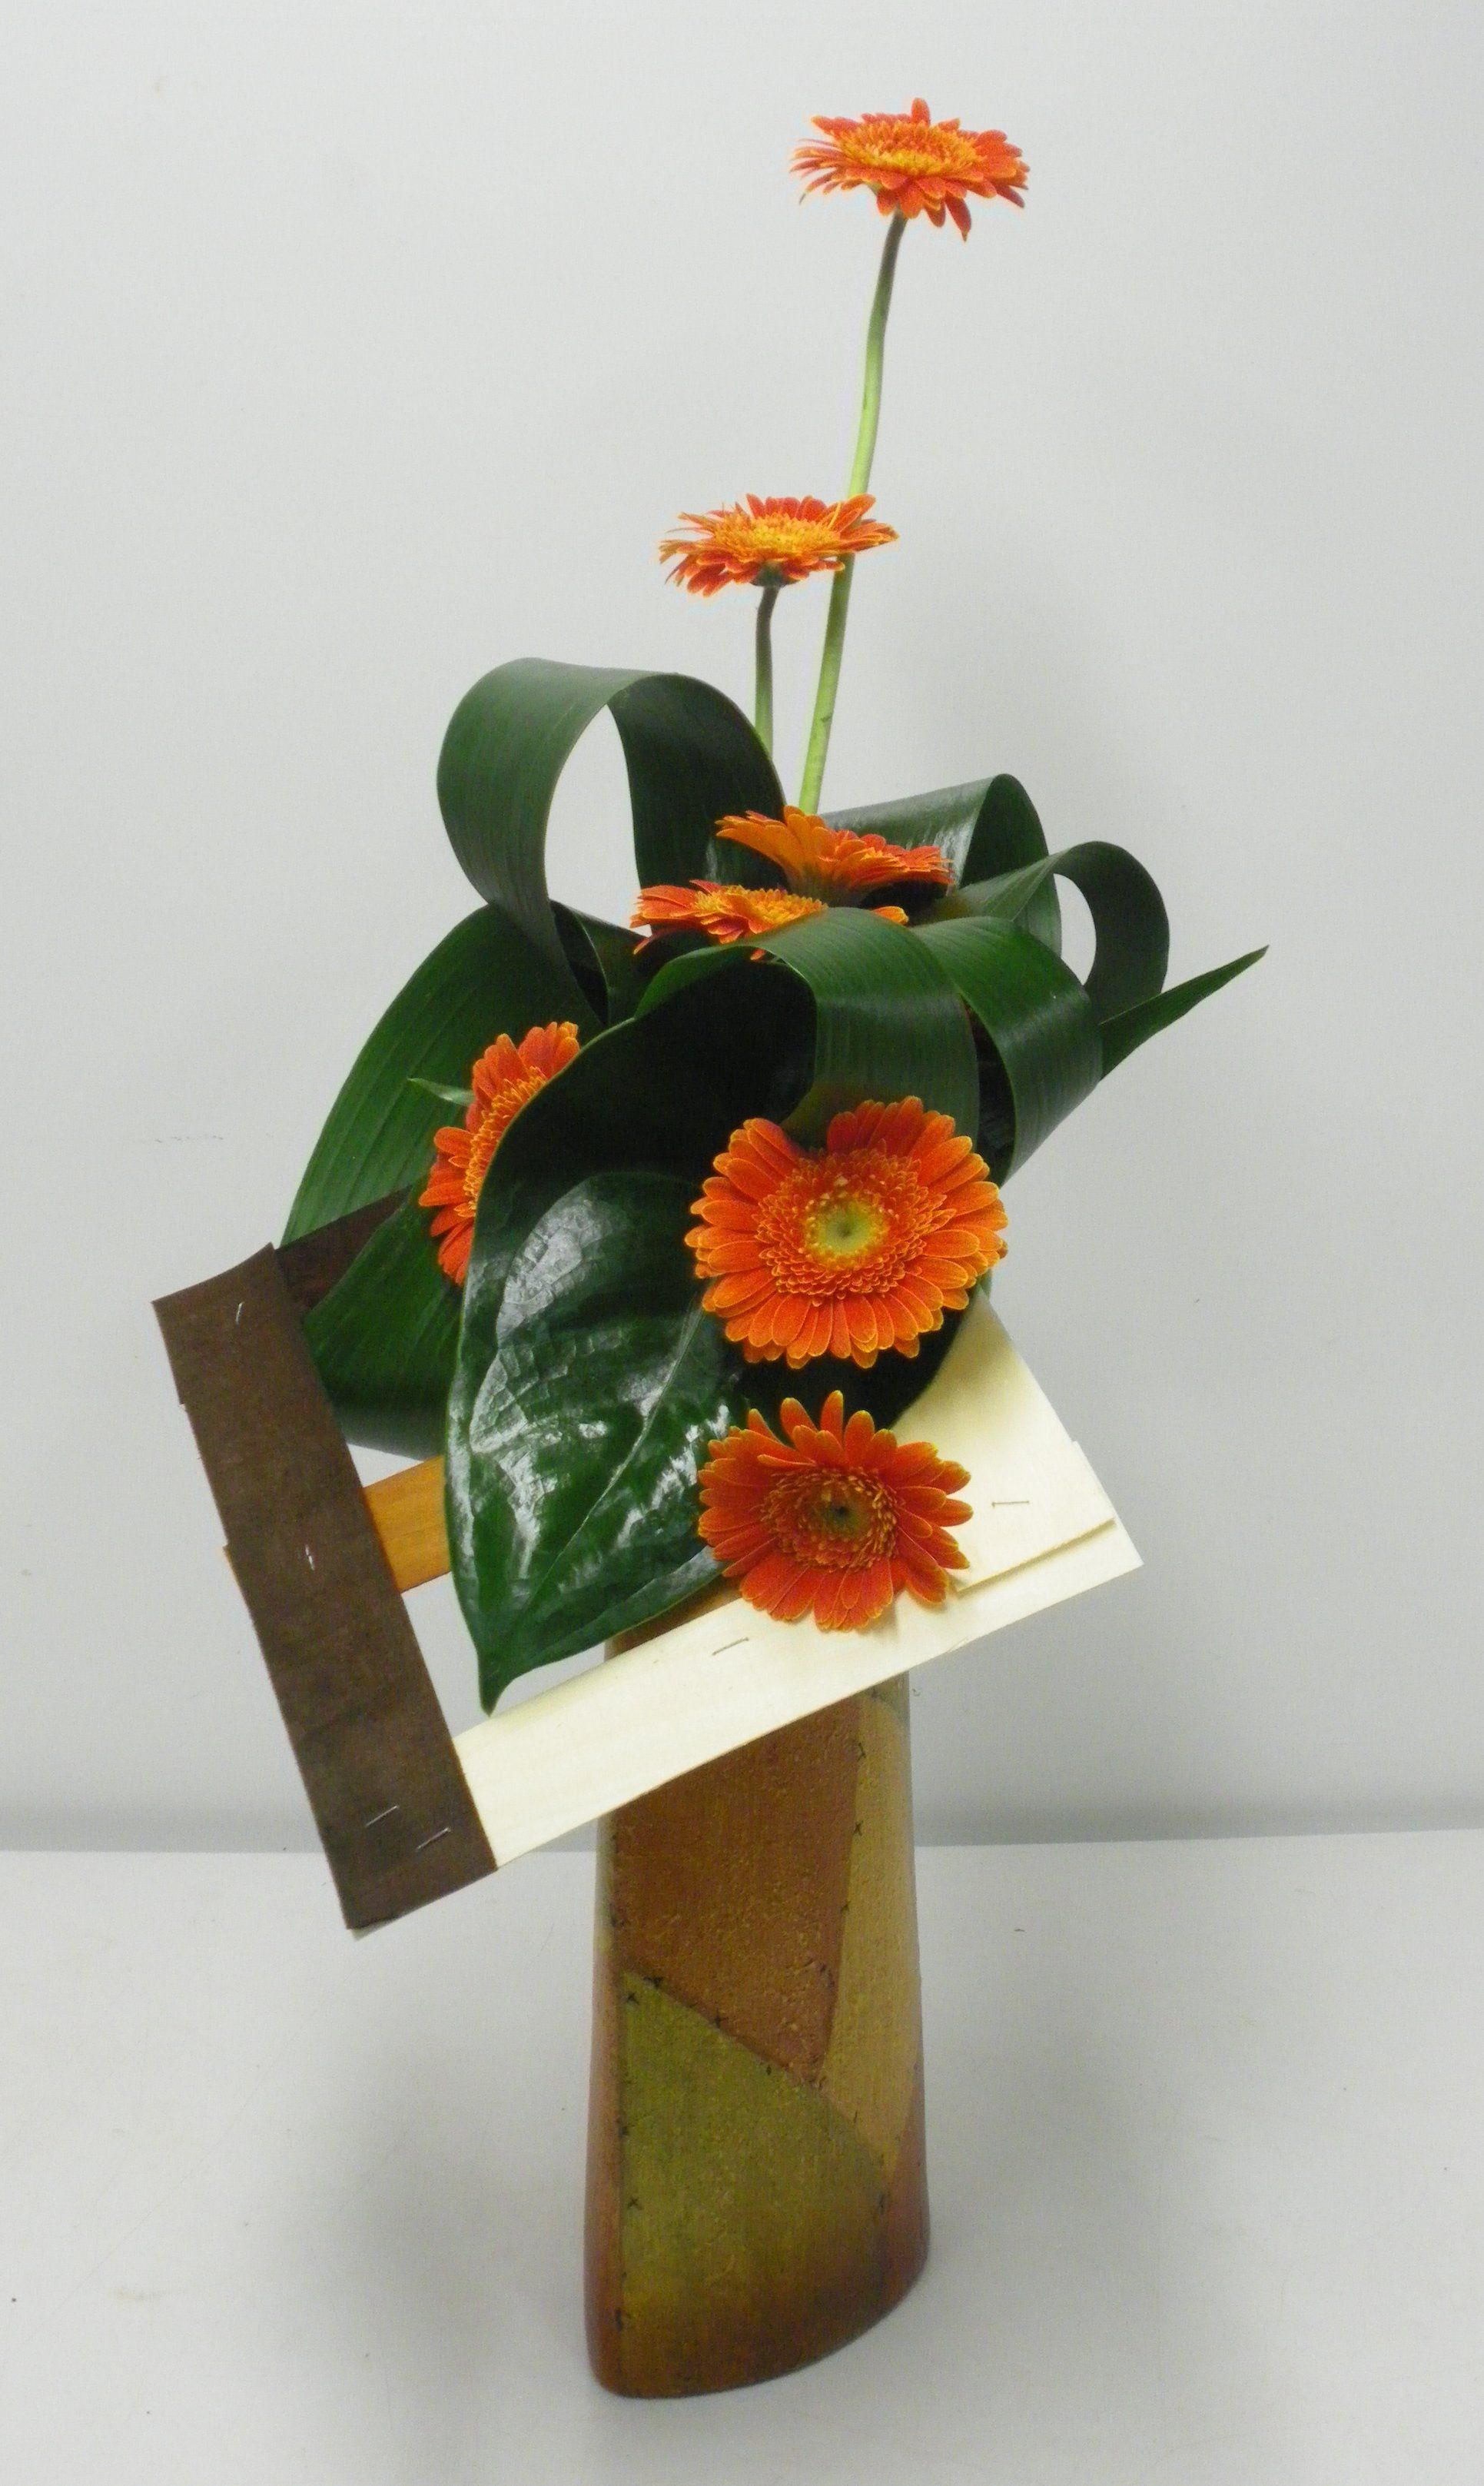 feuille d'Anthurium, feuilles d'Aspidistra | Fleurs | Pinterest ...